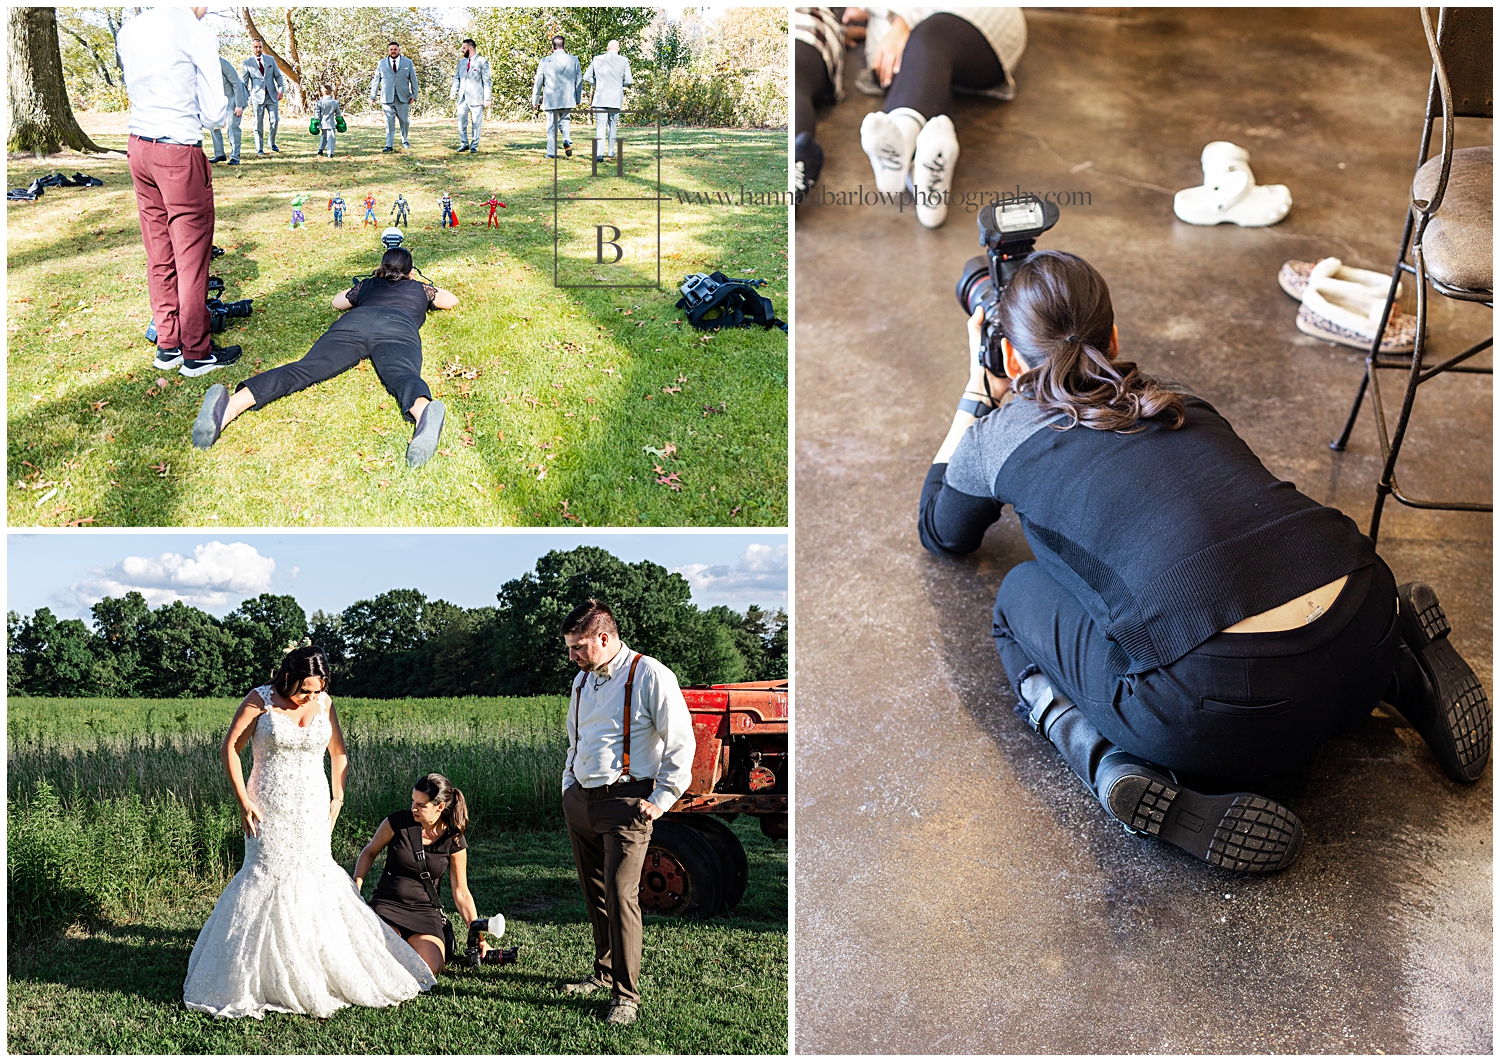 Wedding photographer lays on group for wedding photos.